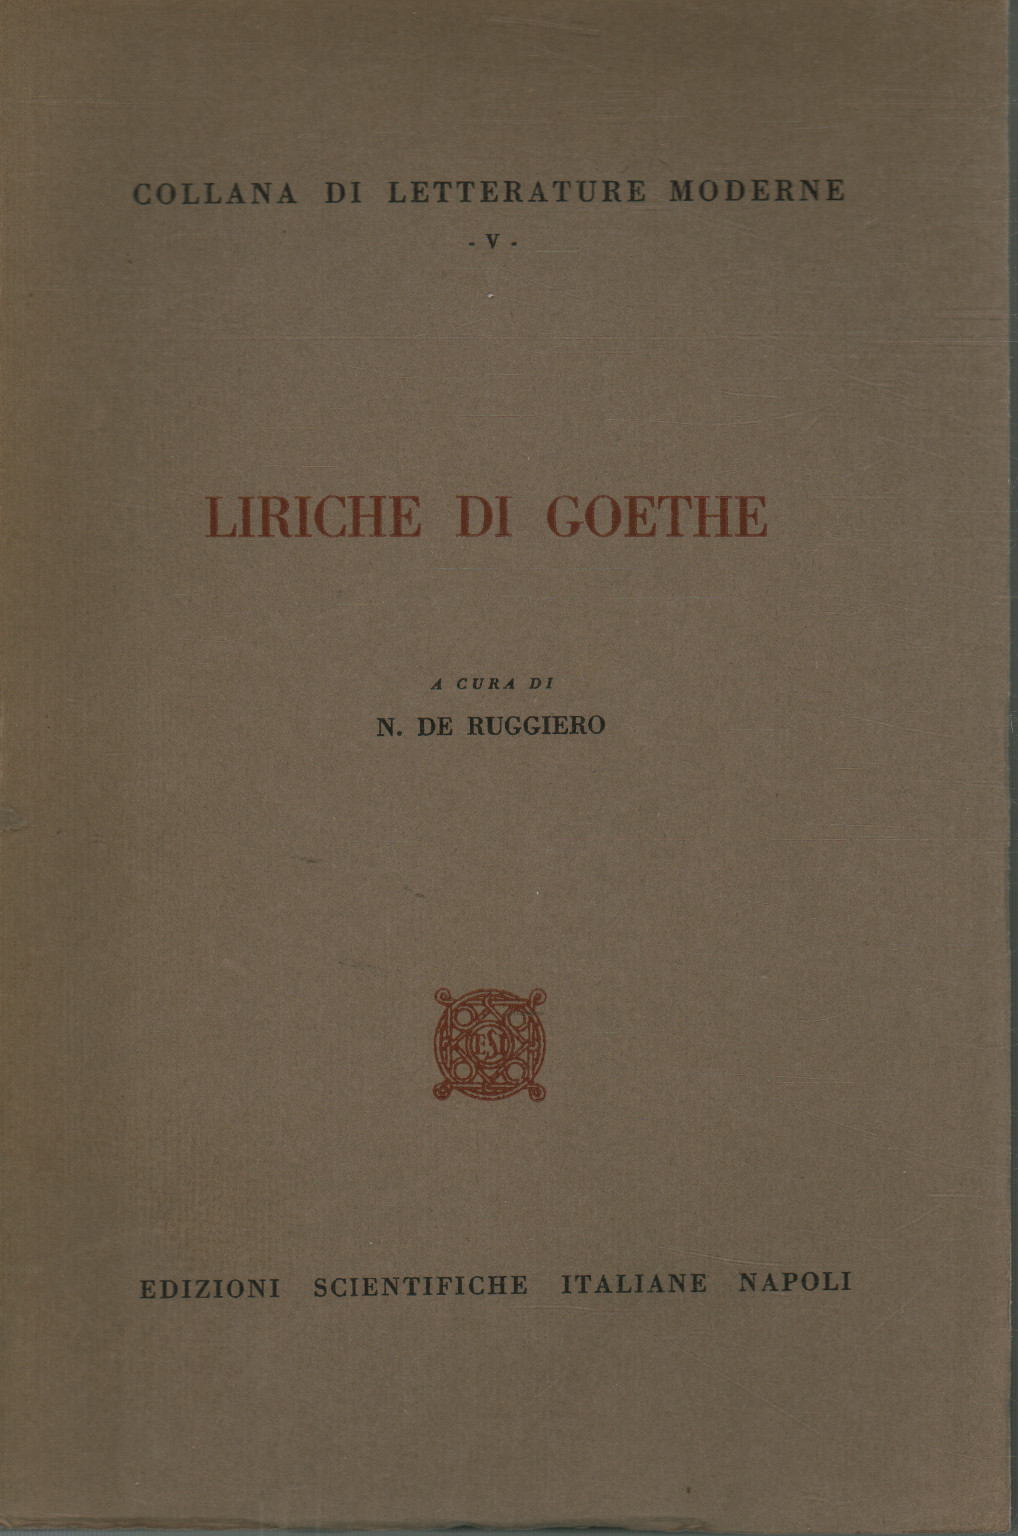 Lyrics by Goethe, N. De Ruggiero